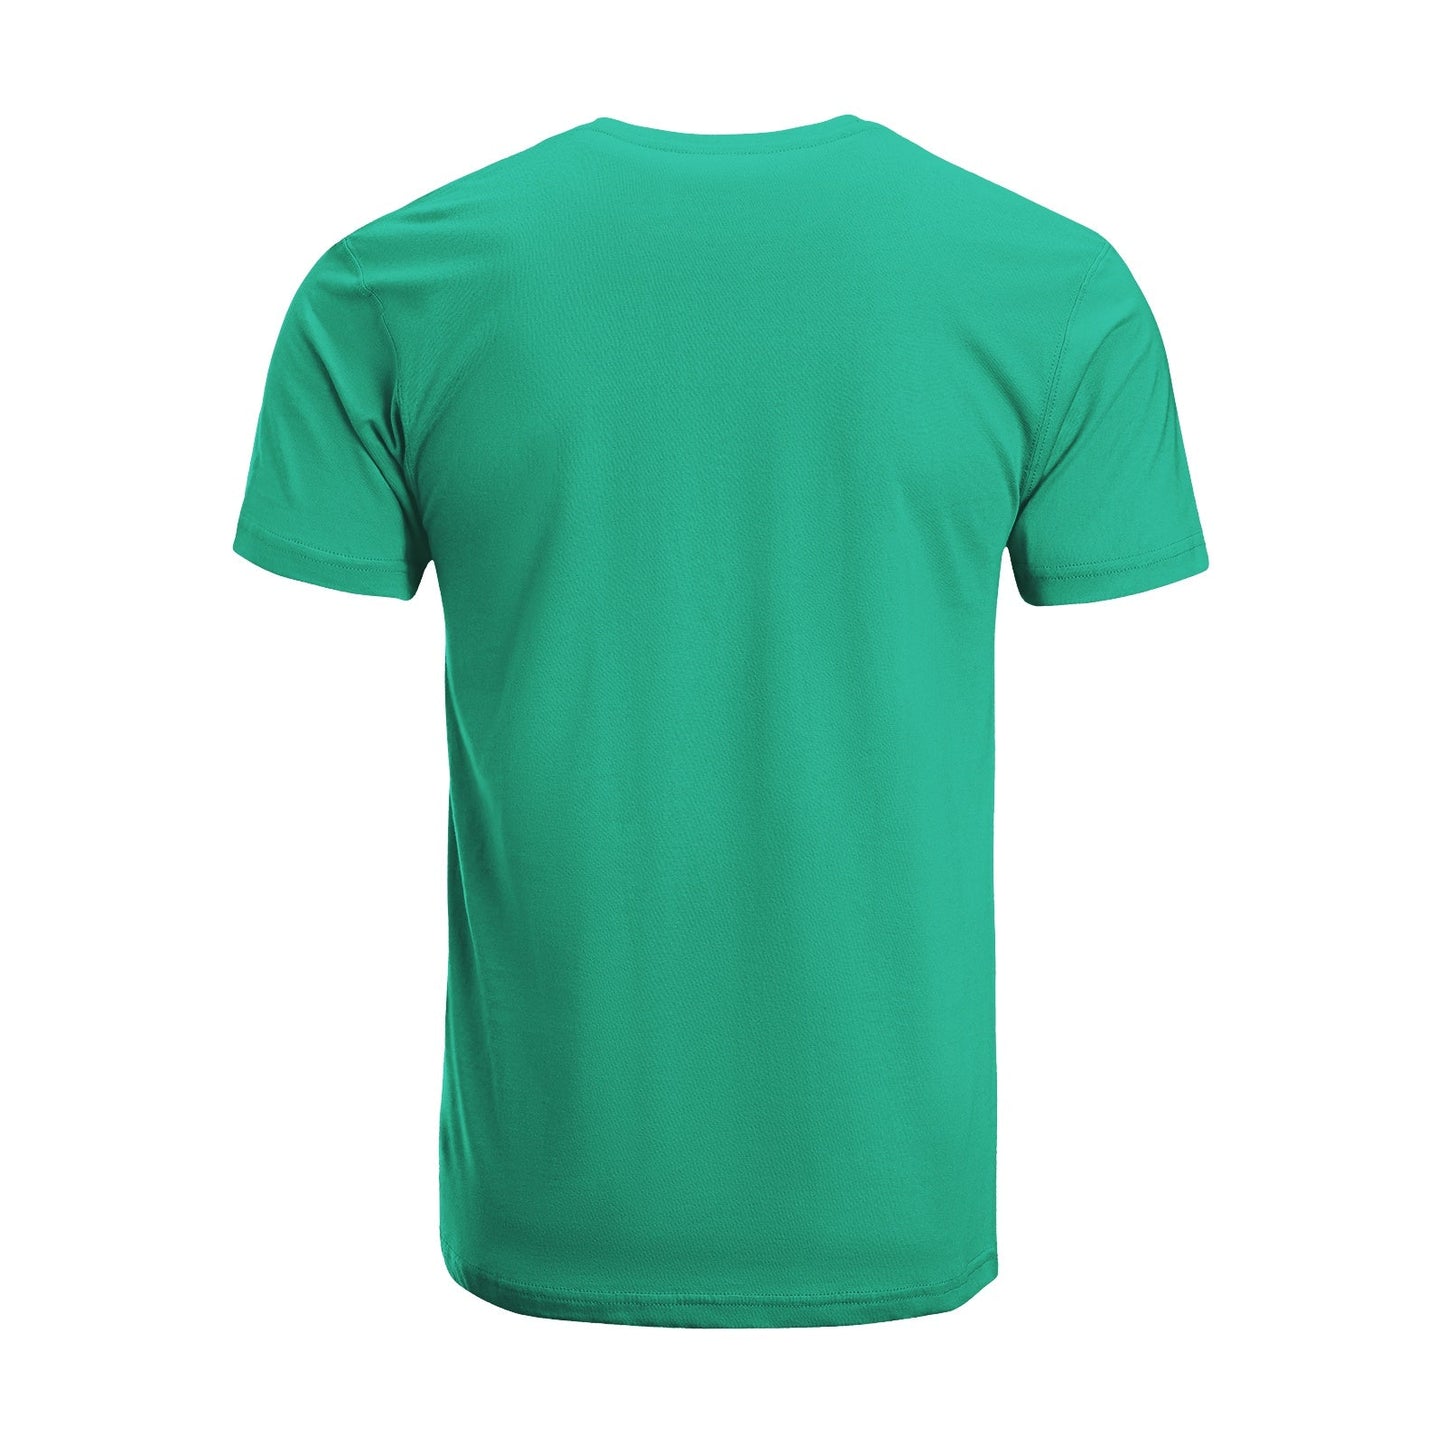 Unisex Short Sleeve Crew Neck Cotton Jersey T-Shirt USA 16